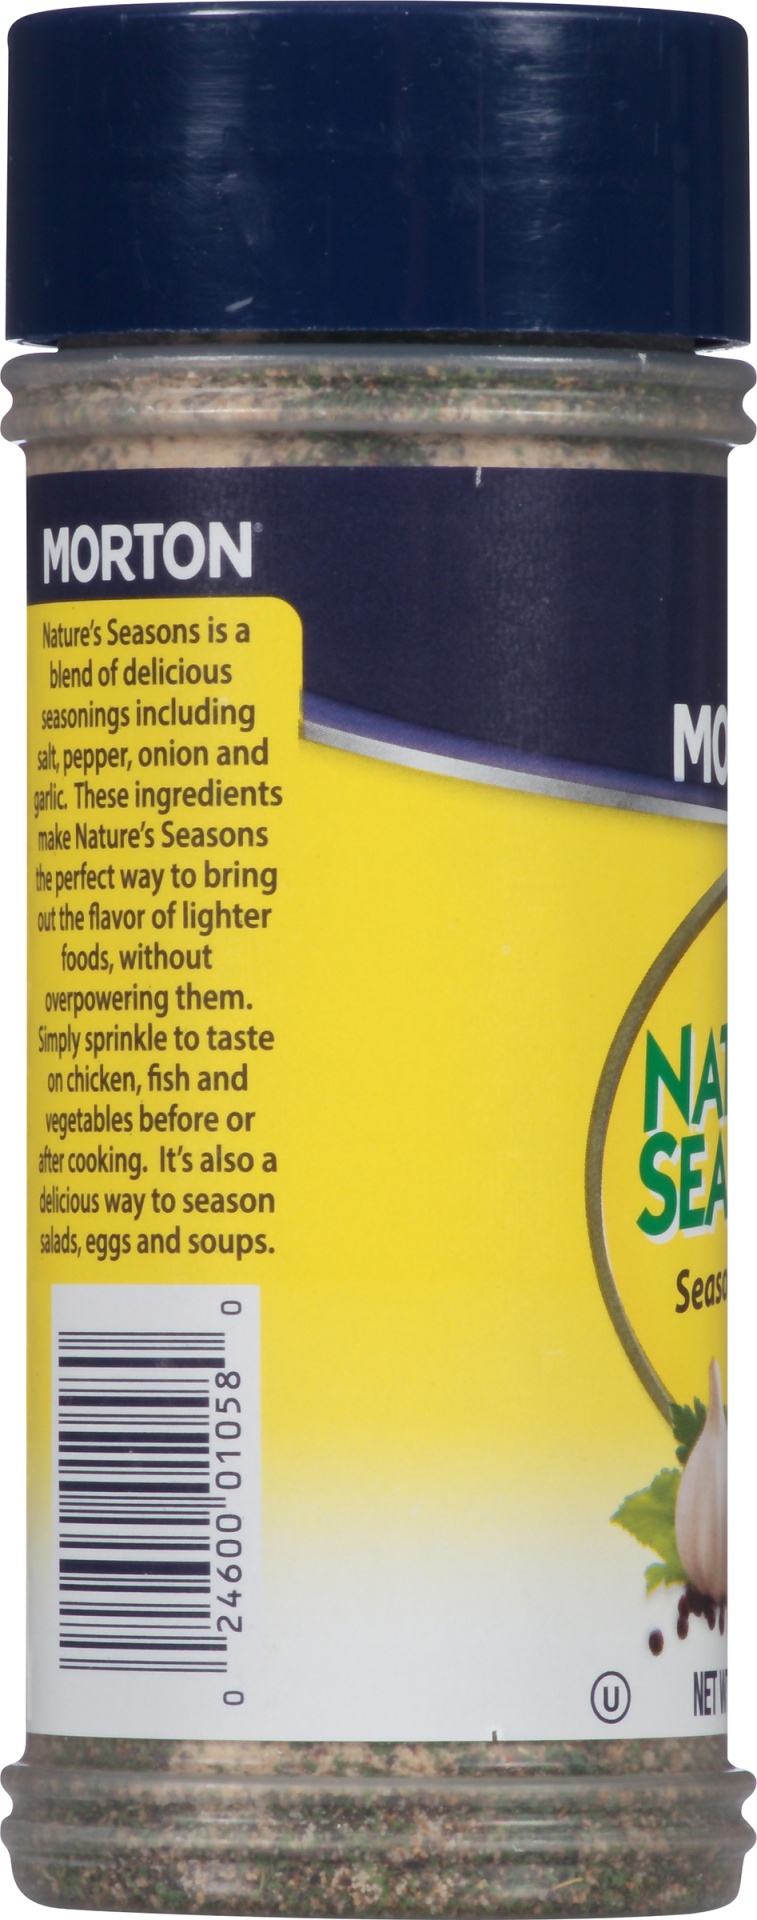 Morton Nature's Seasons Seasoning Blend - Shop Spice Mixes at H-E-B